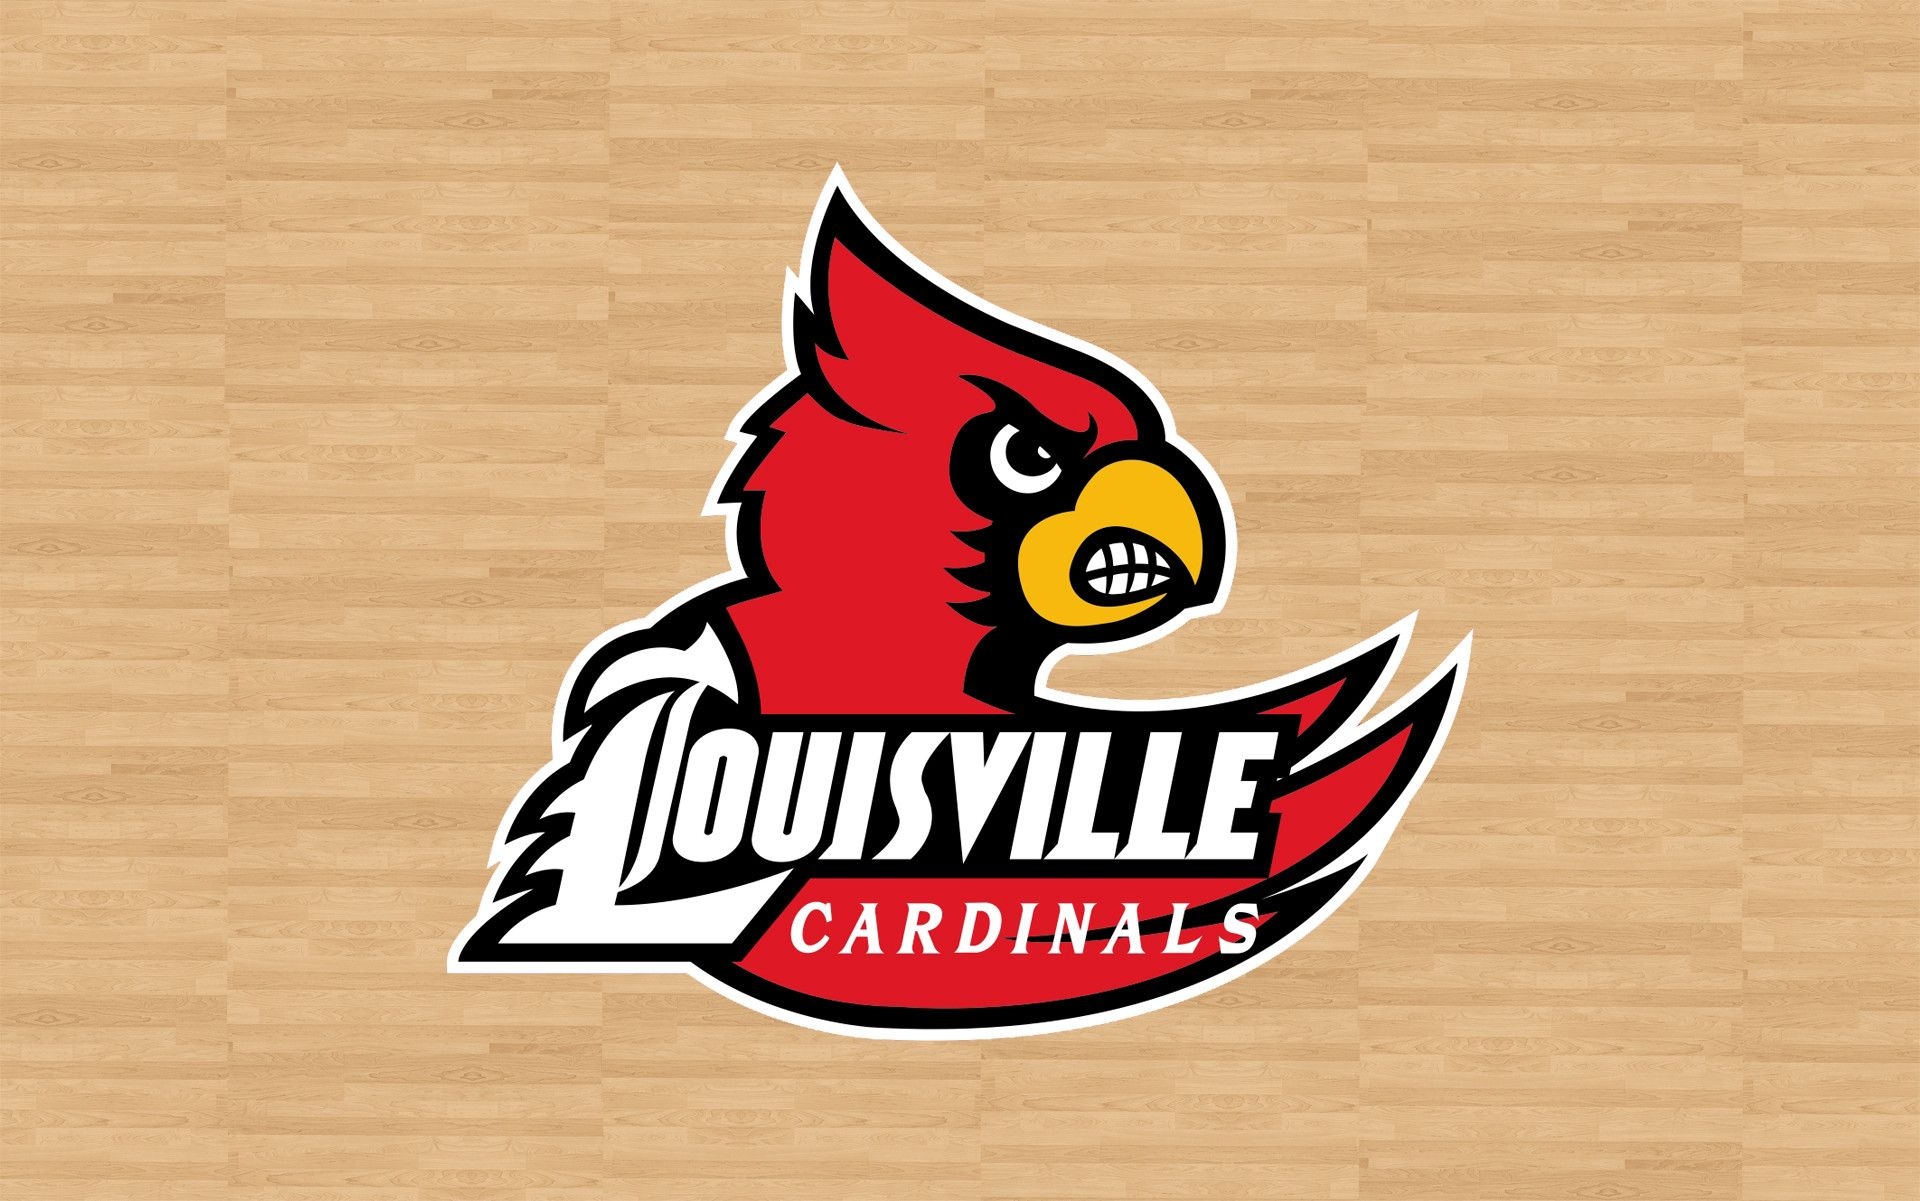 Louisville Cardinals, Team wallpapers, Sports admiration, Fandom pride, 1920x1210 HD Desktop